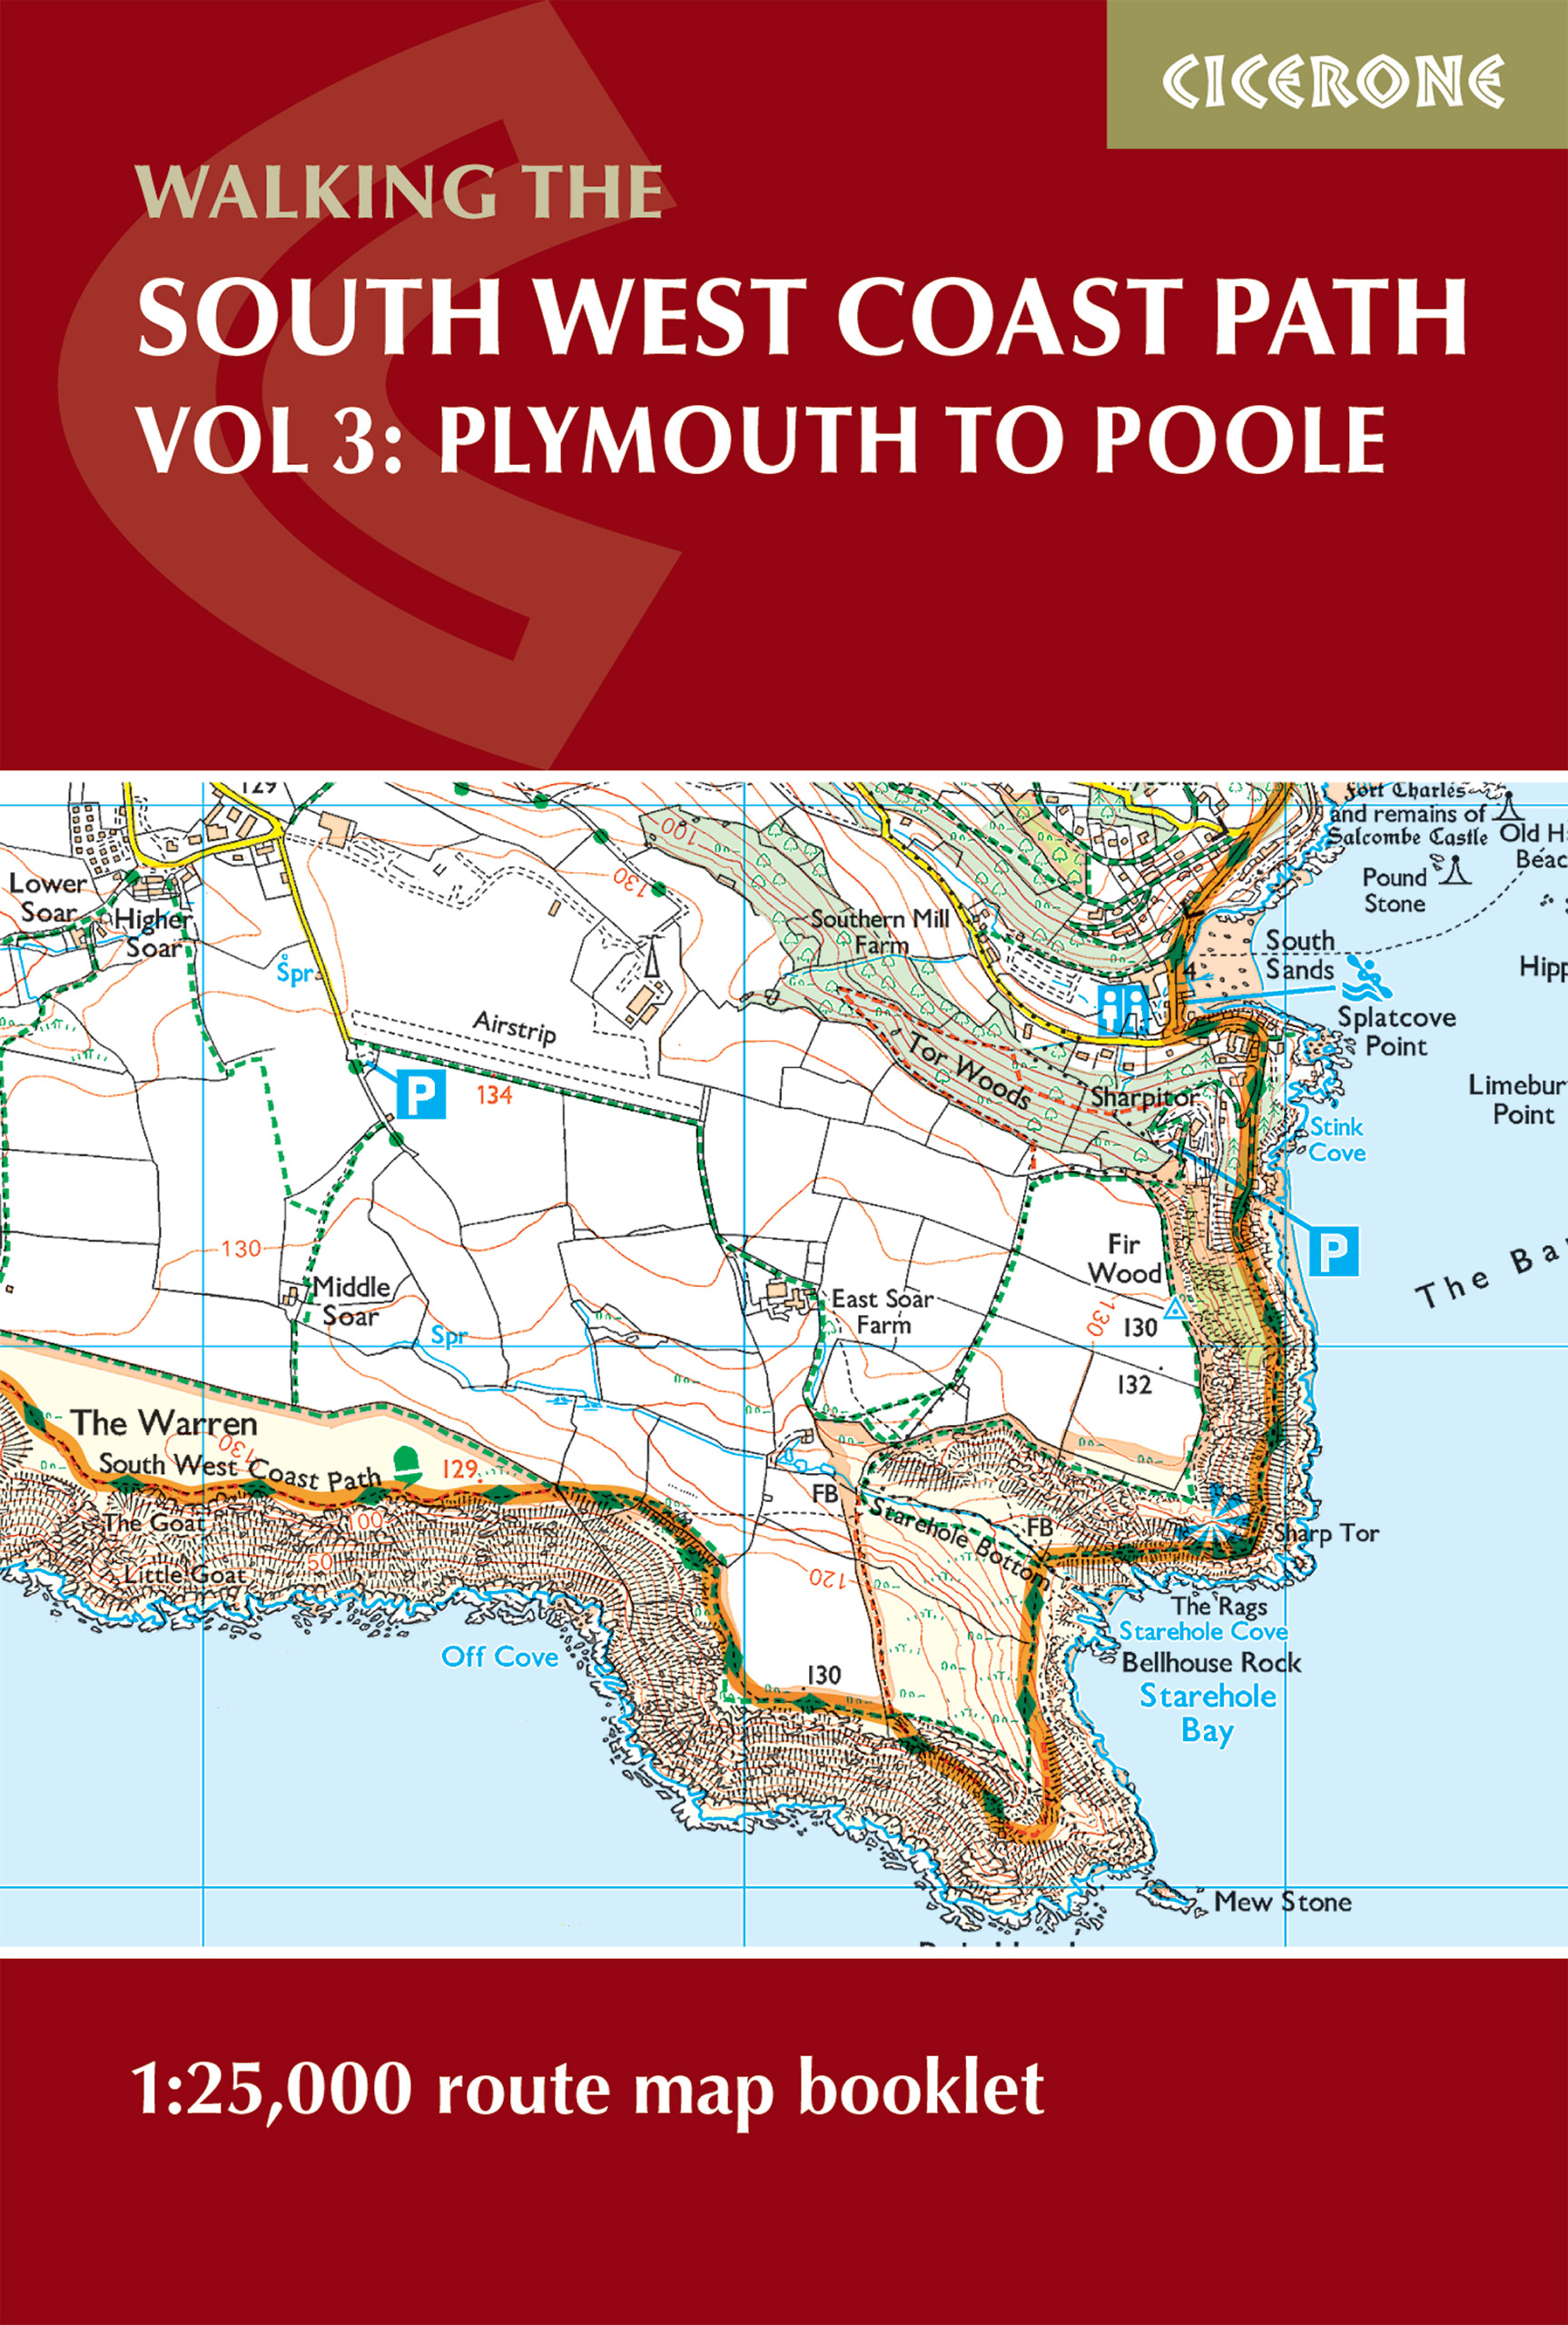 Online bestellen: Wandelatlas South West Coast Path Map Booklet - Vol 3 | Cicerone